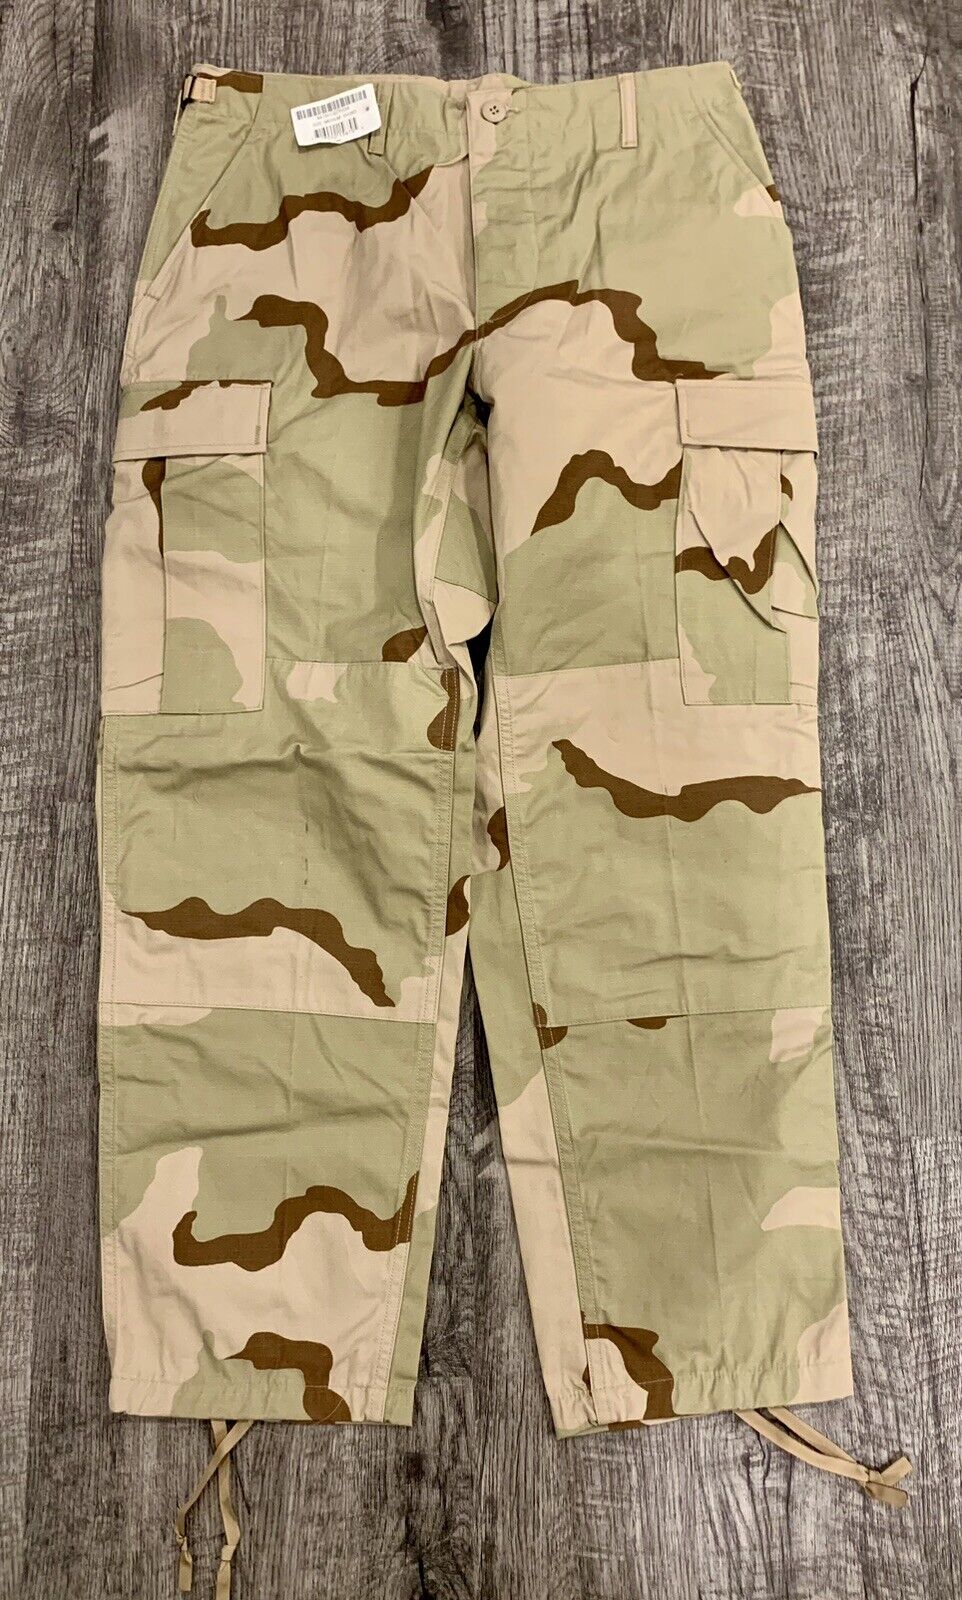 BNWT USGI DCU Desert Camouflage Combat Uniform Trousers Pants Medium Short NEW